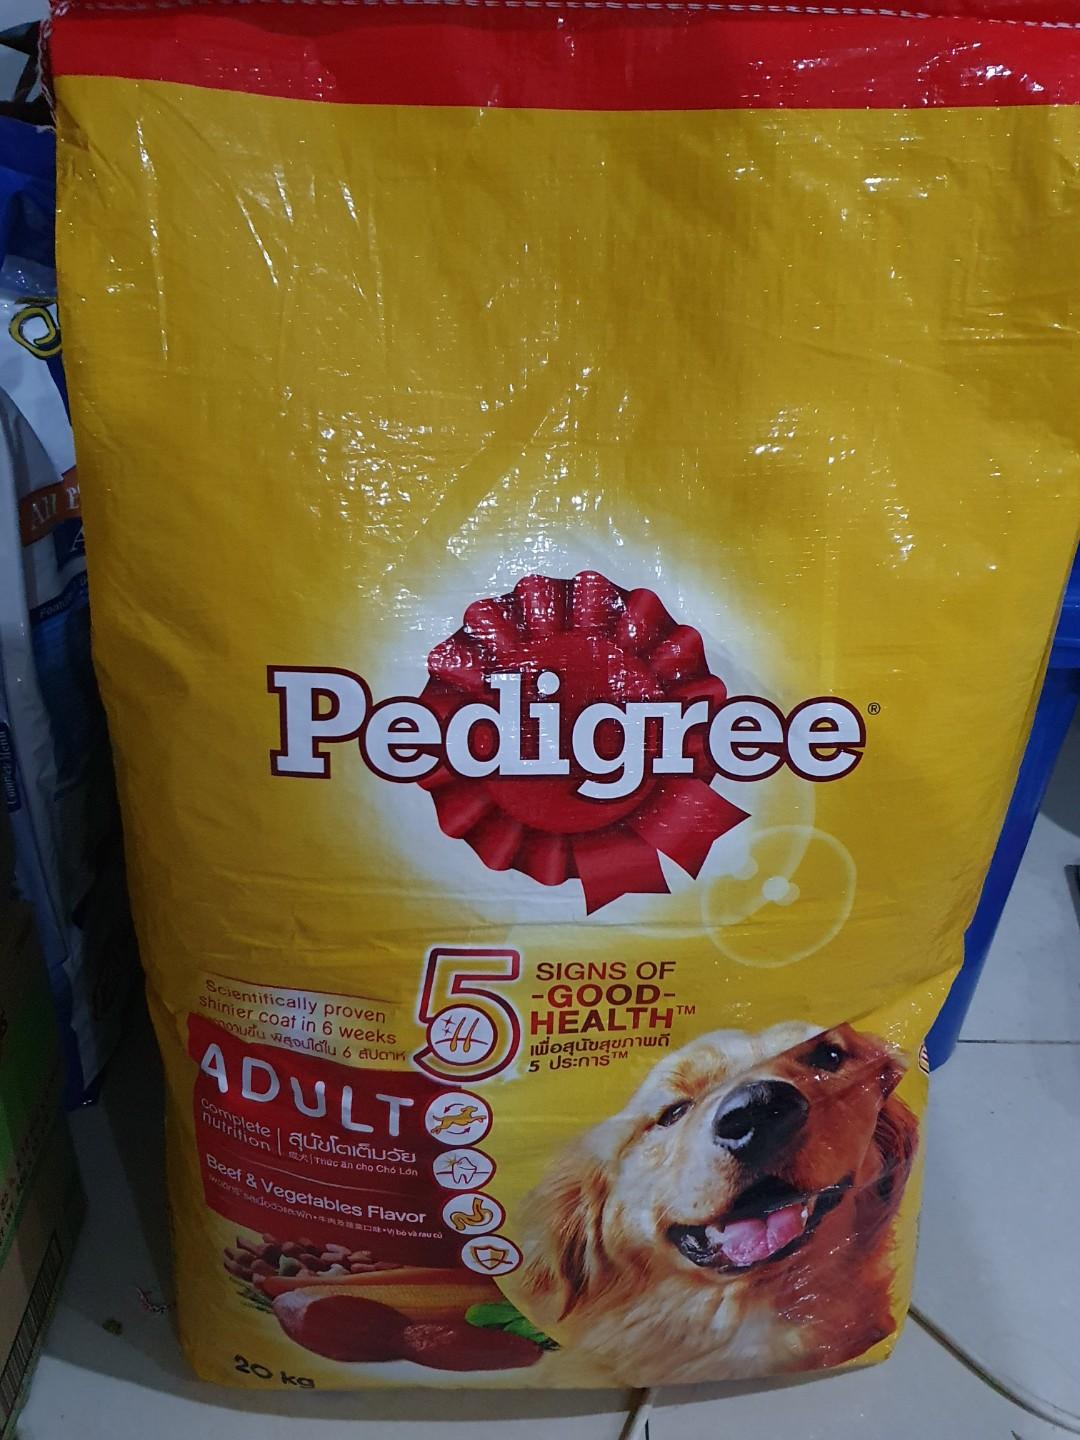 top breed dog food price 1 sack